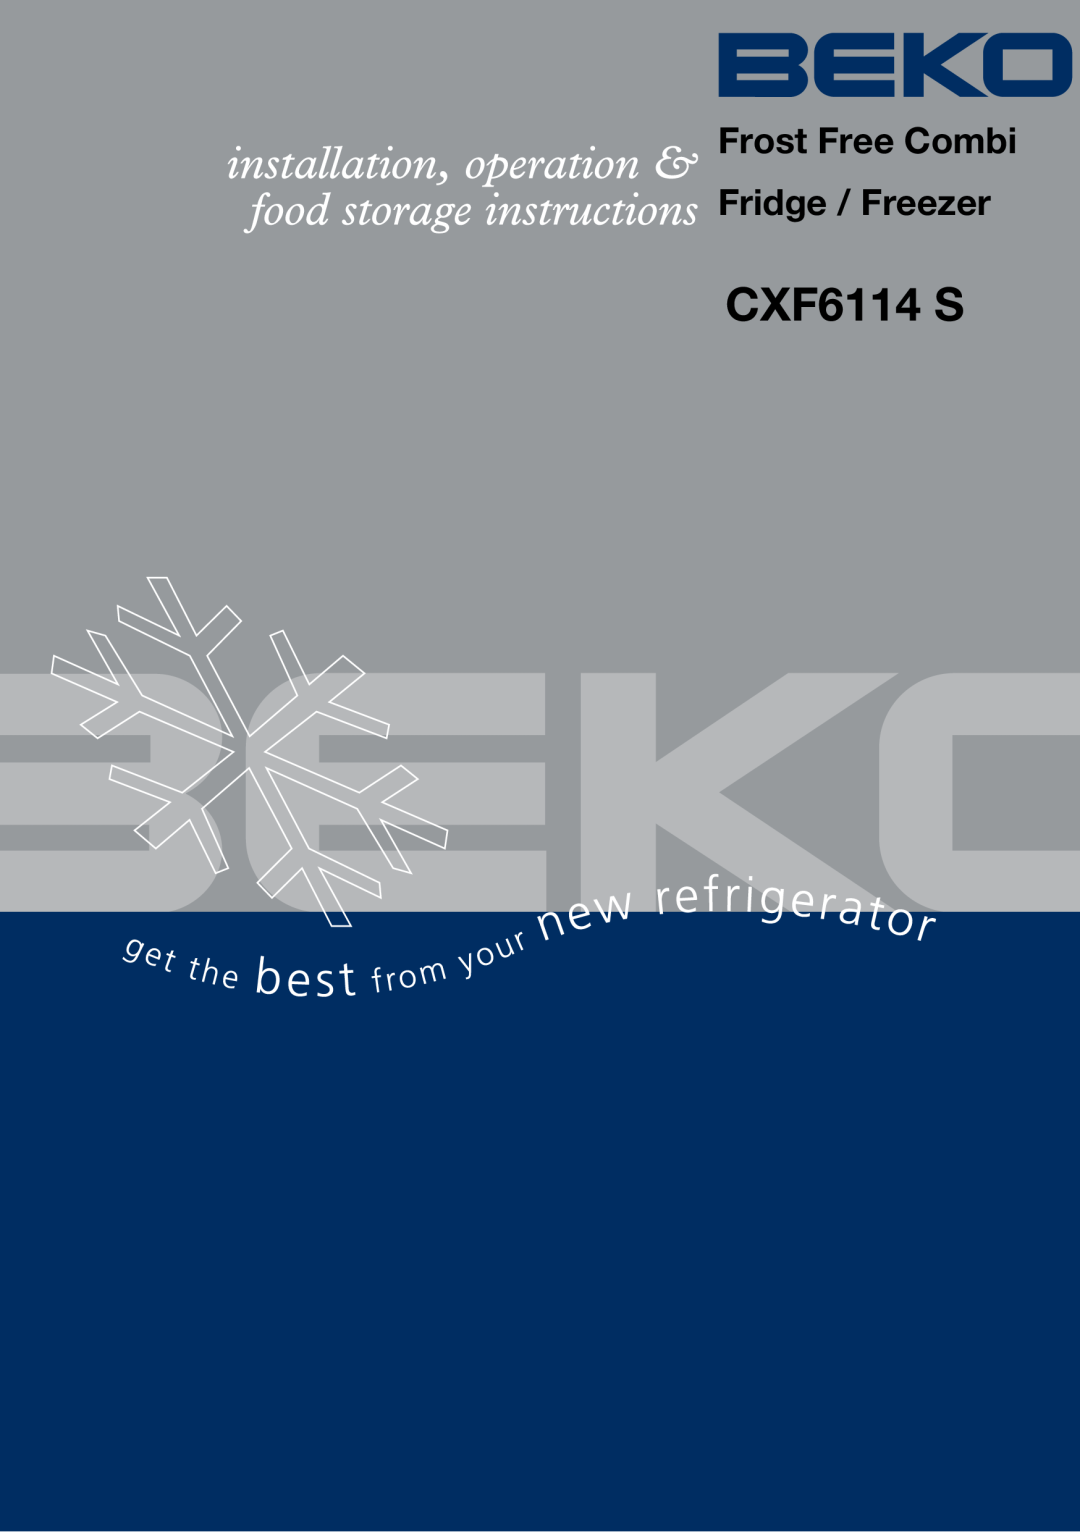 Beko CXF6114 S manual Frost Free Combi Fridge / Freezer 